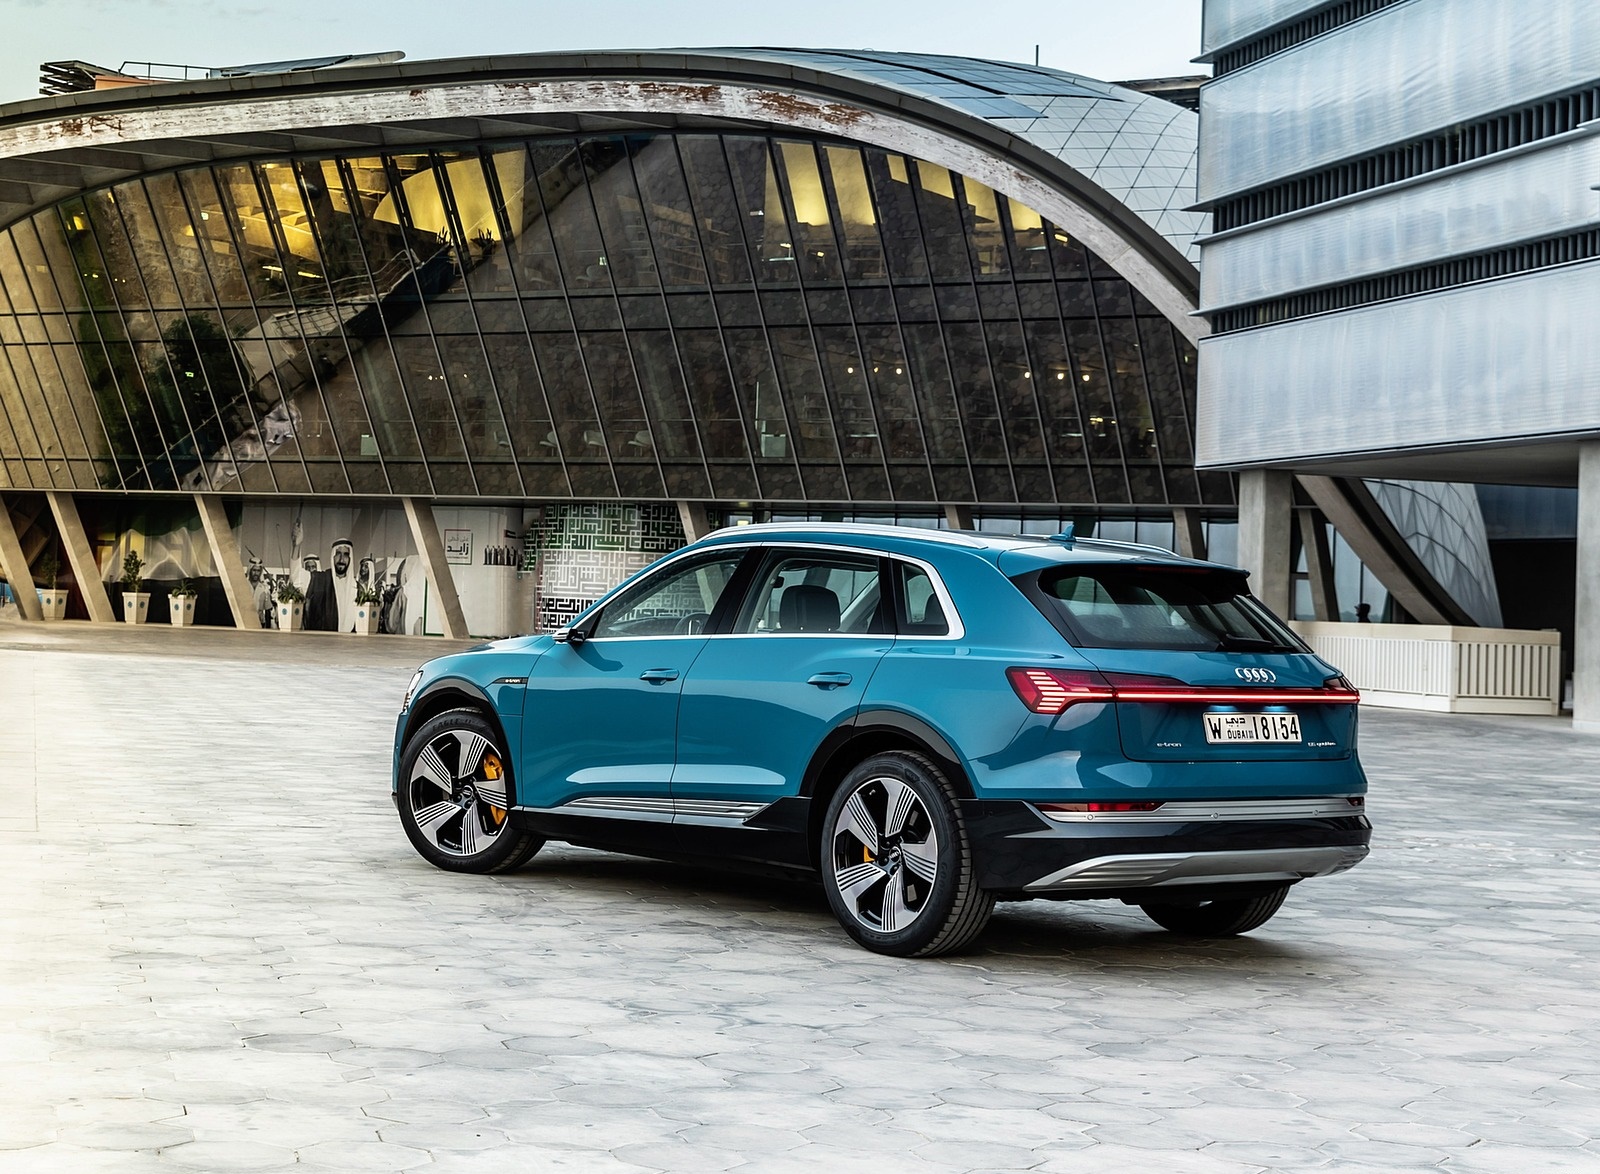 2019 Audi e-tron (Color: Antigua Blue) Rear Three-Quarter Wallpapers #116 of 234